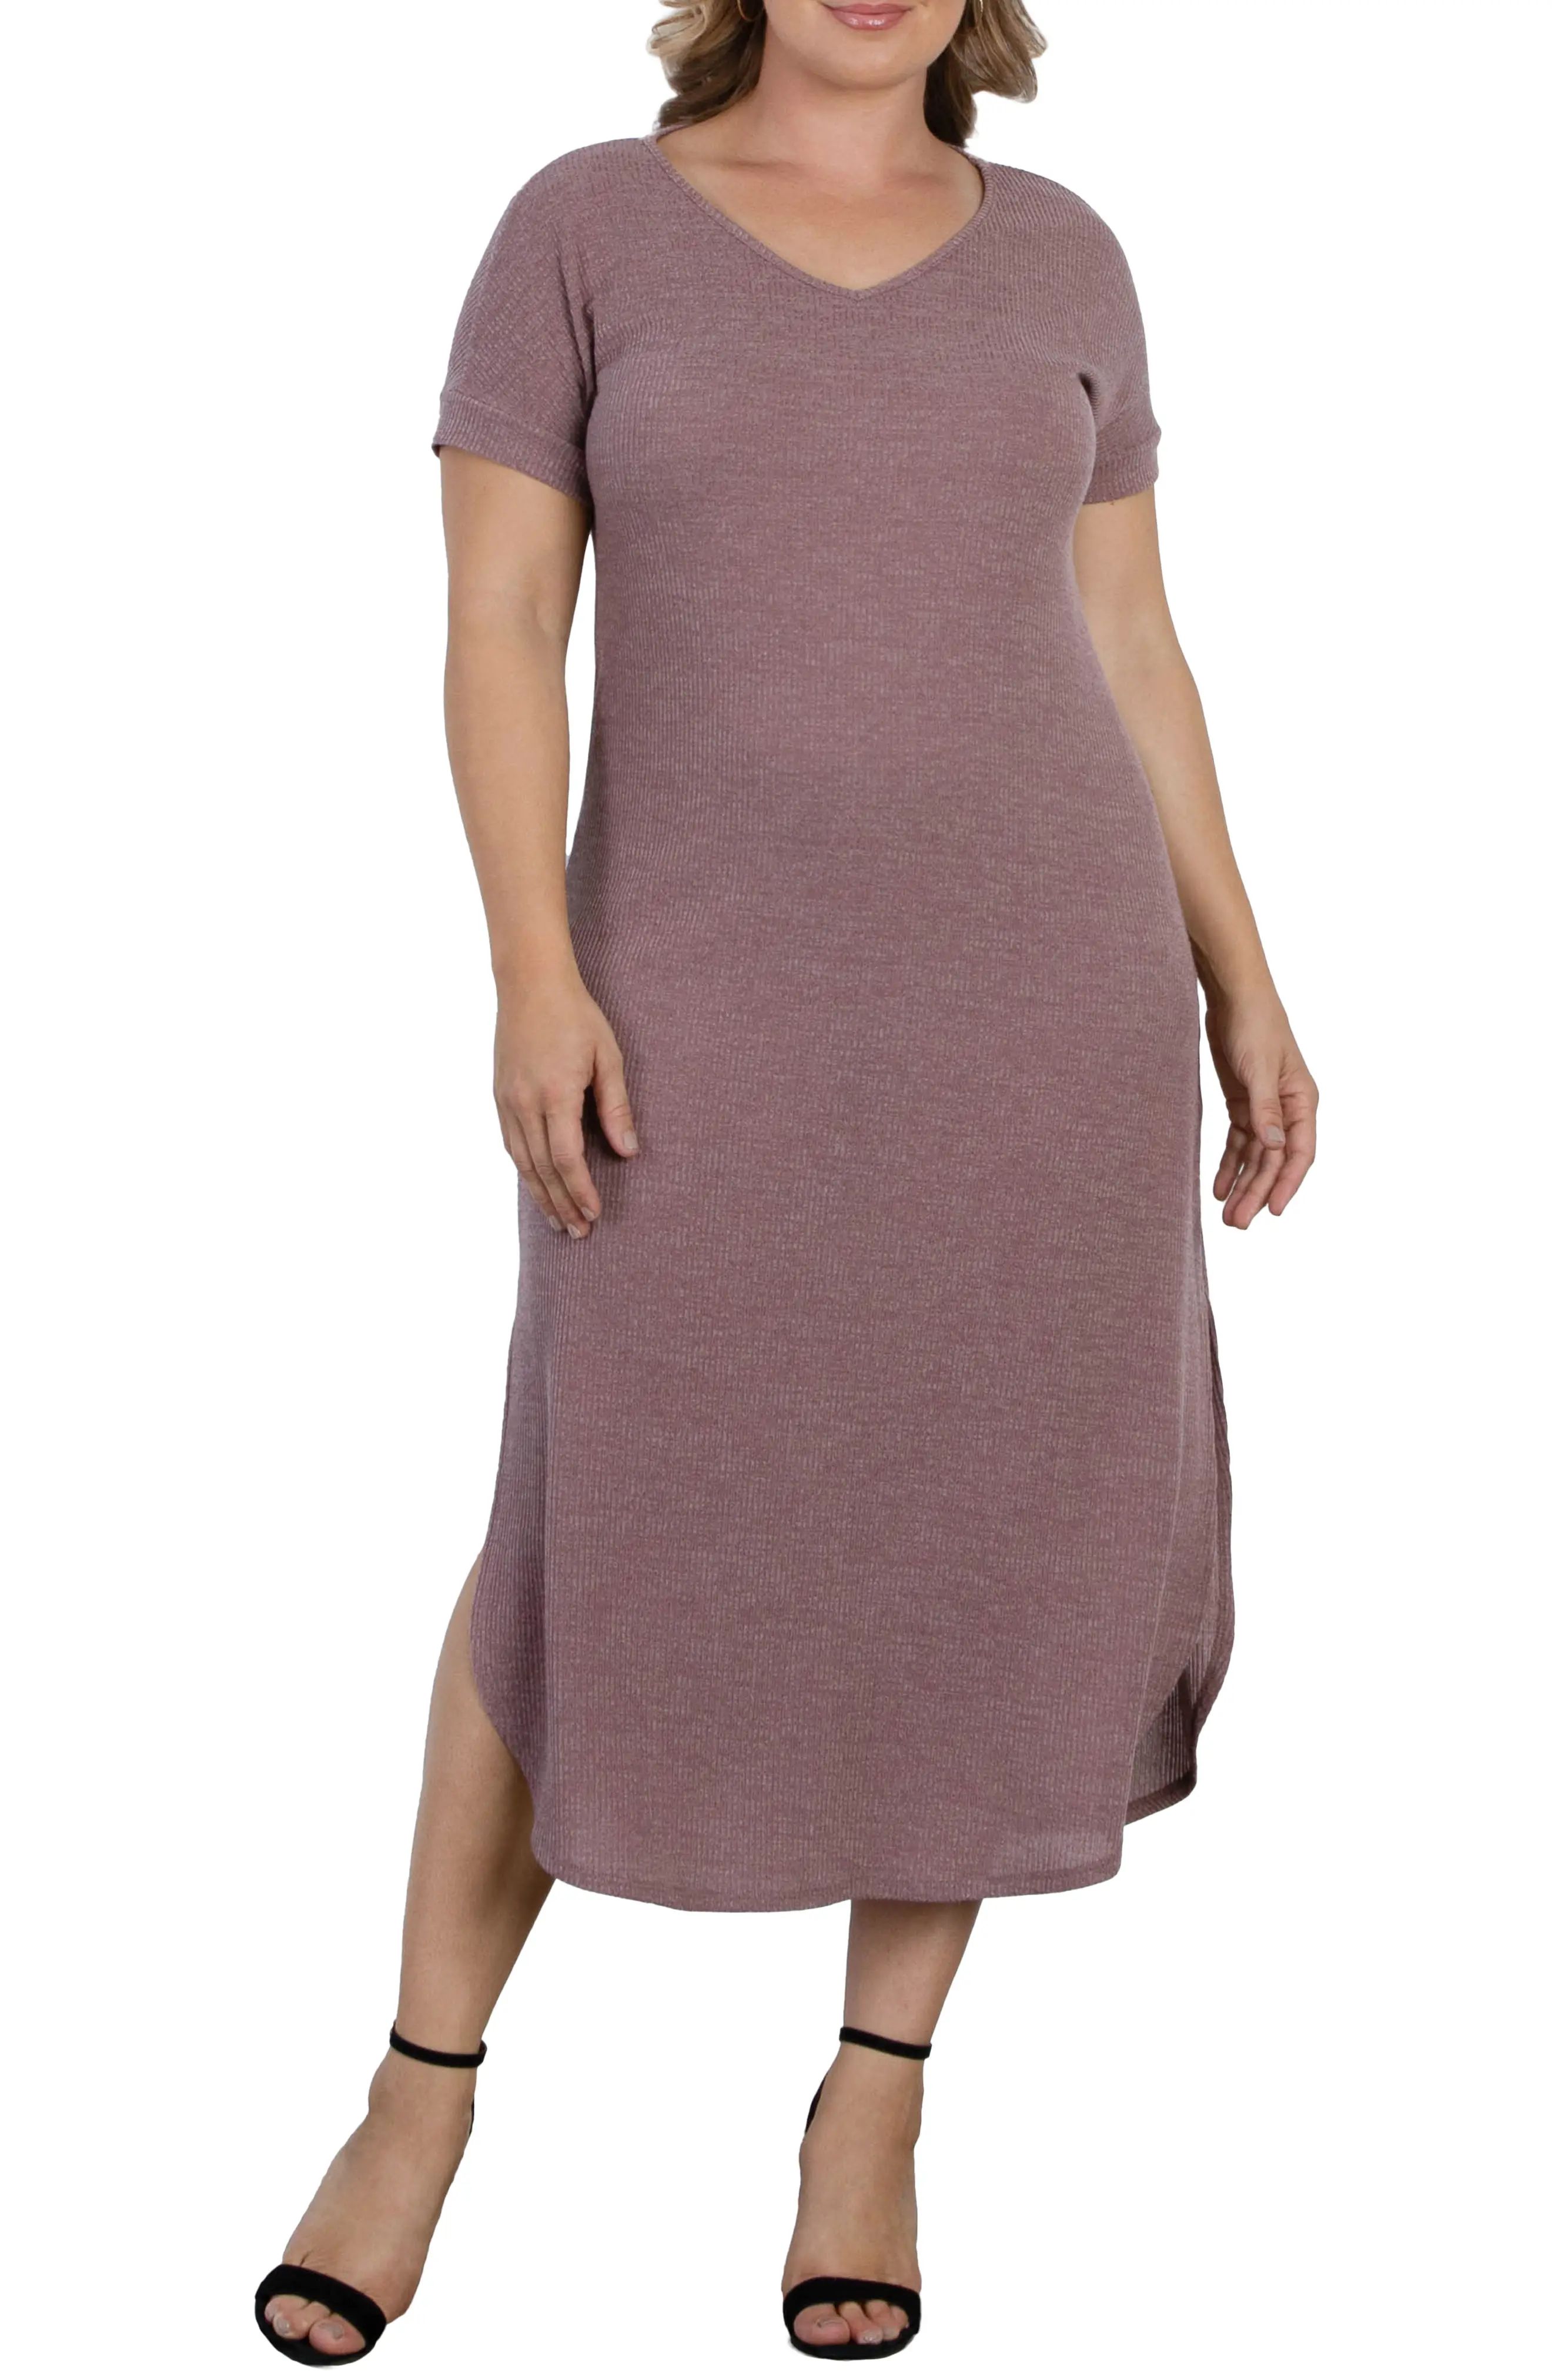 Kiyonna Jetsetter Side Slit Maxi Dress, Size 0X in Mauve at Nordstrom | Nordstrom